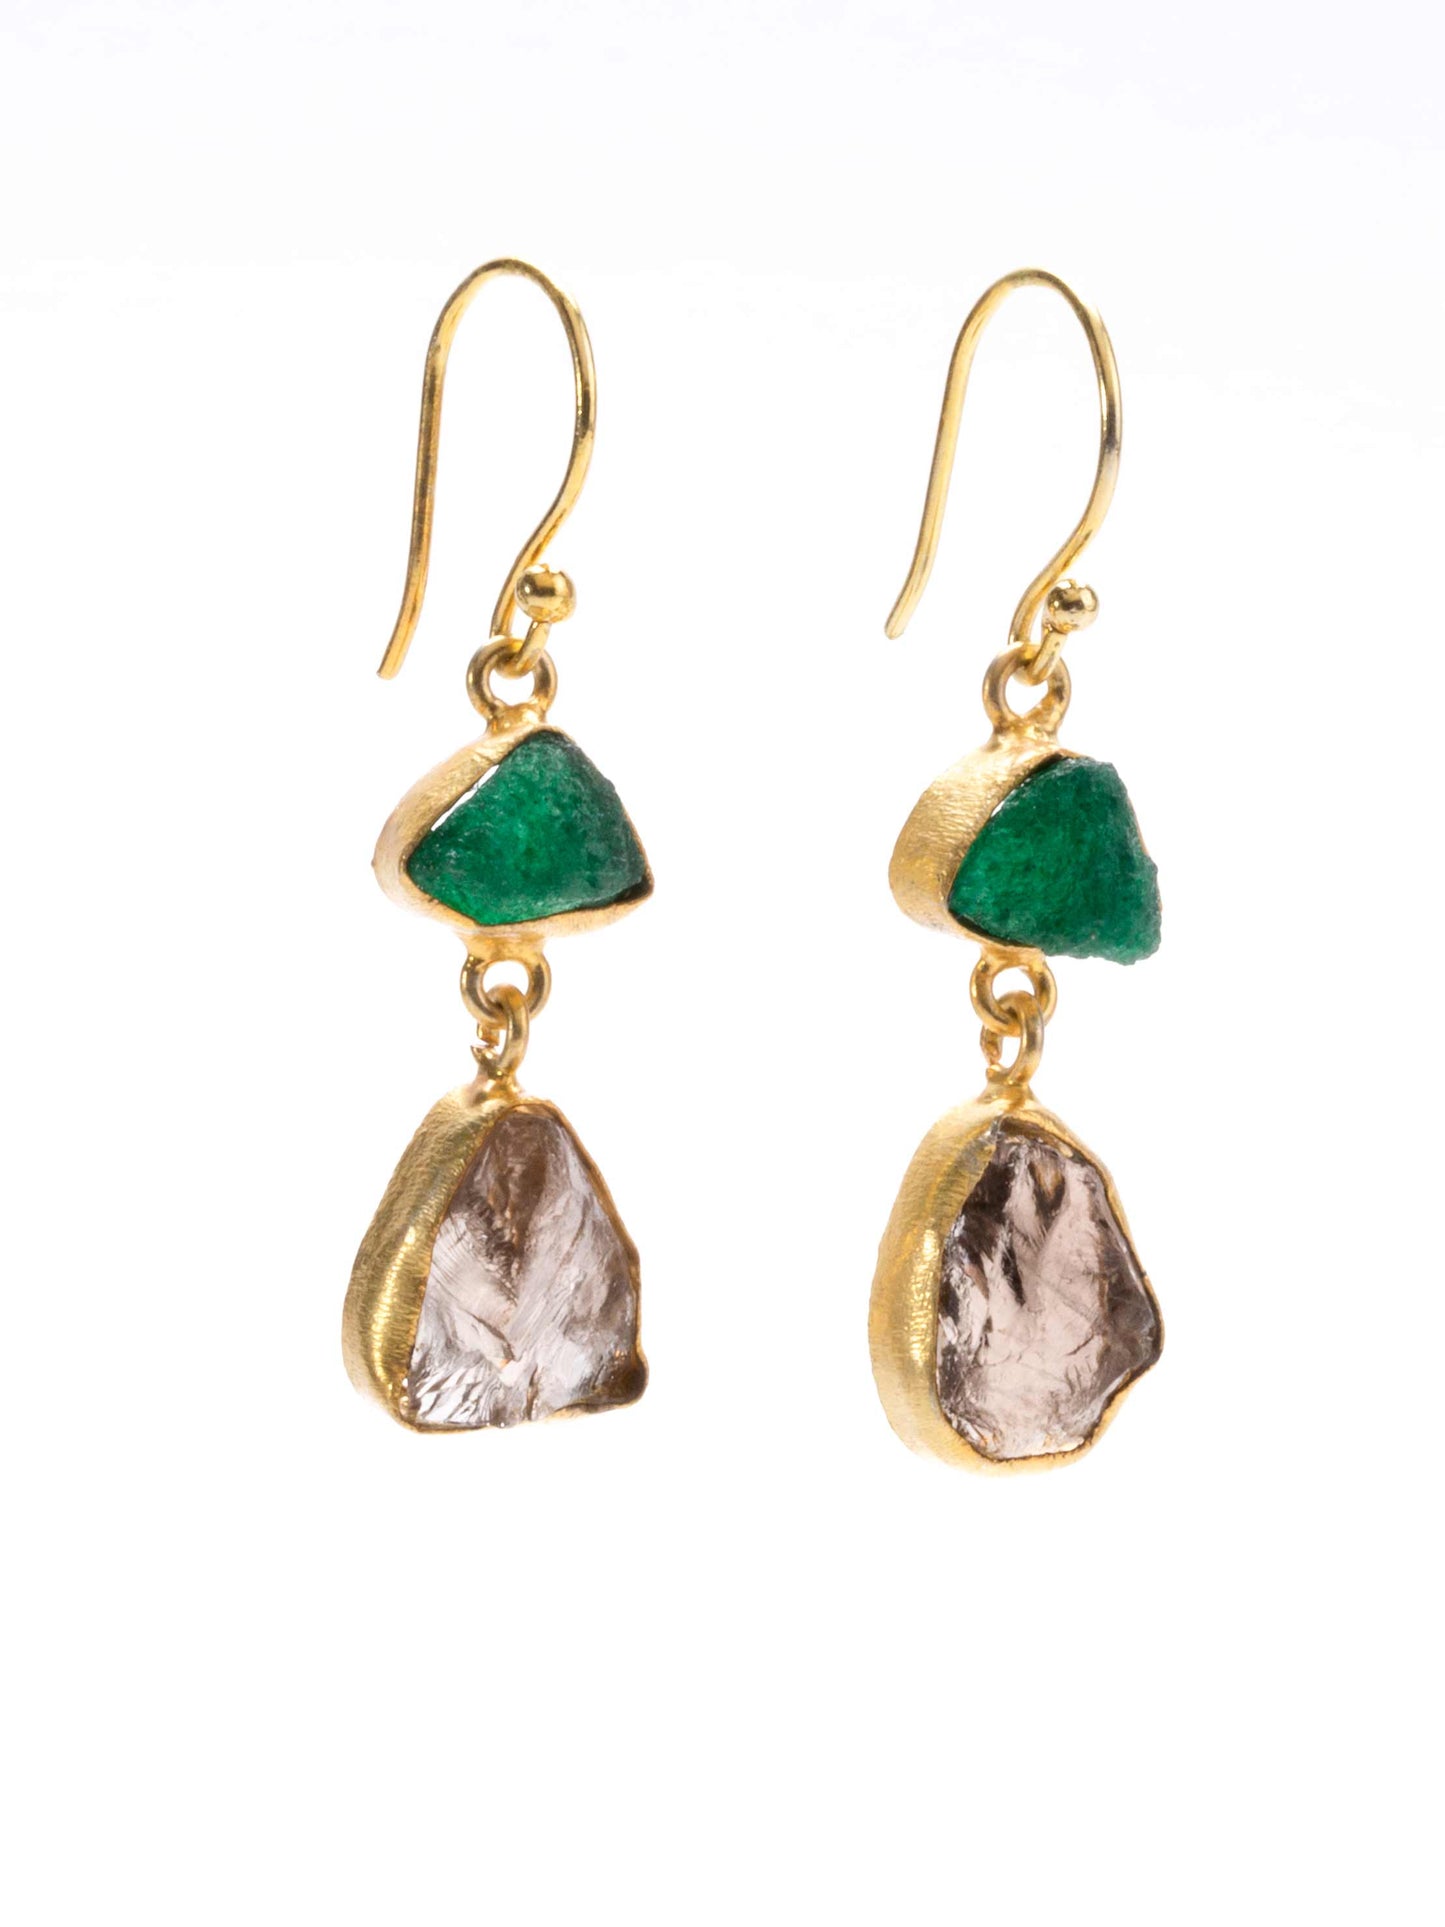 Gold Luxe earrings - aventurine and smokey quartz double drop dangles